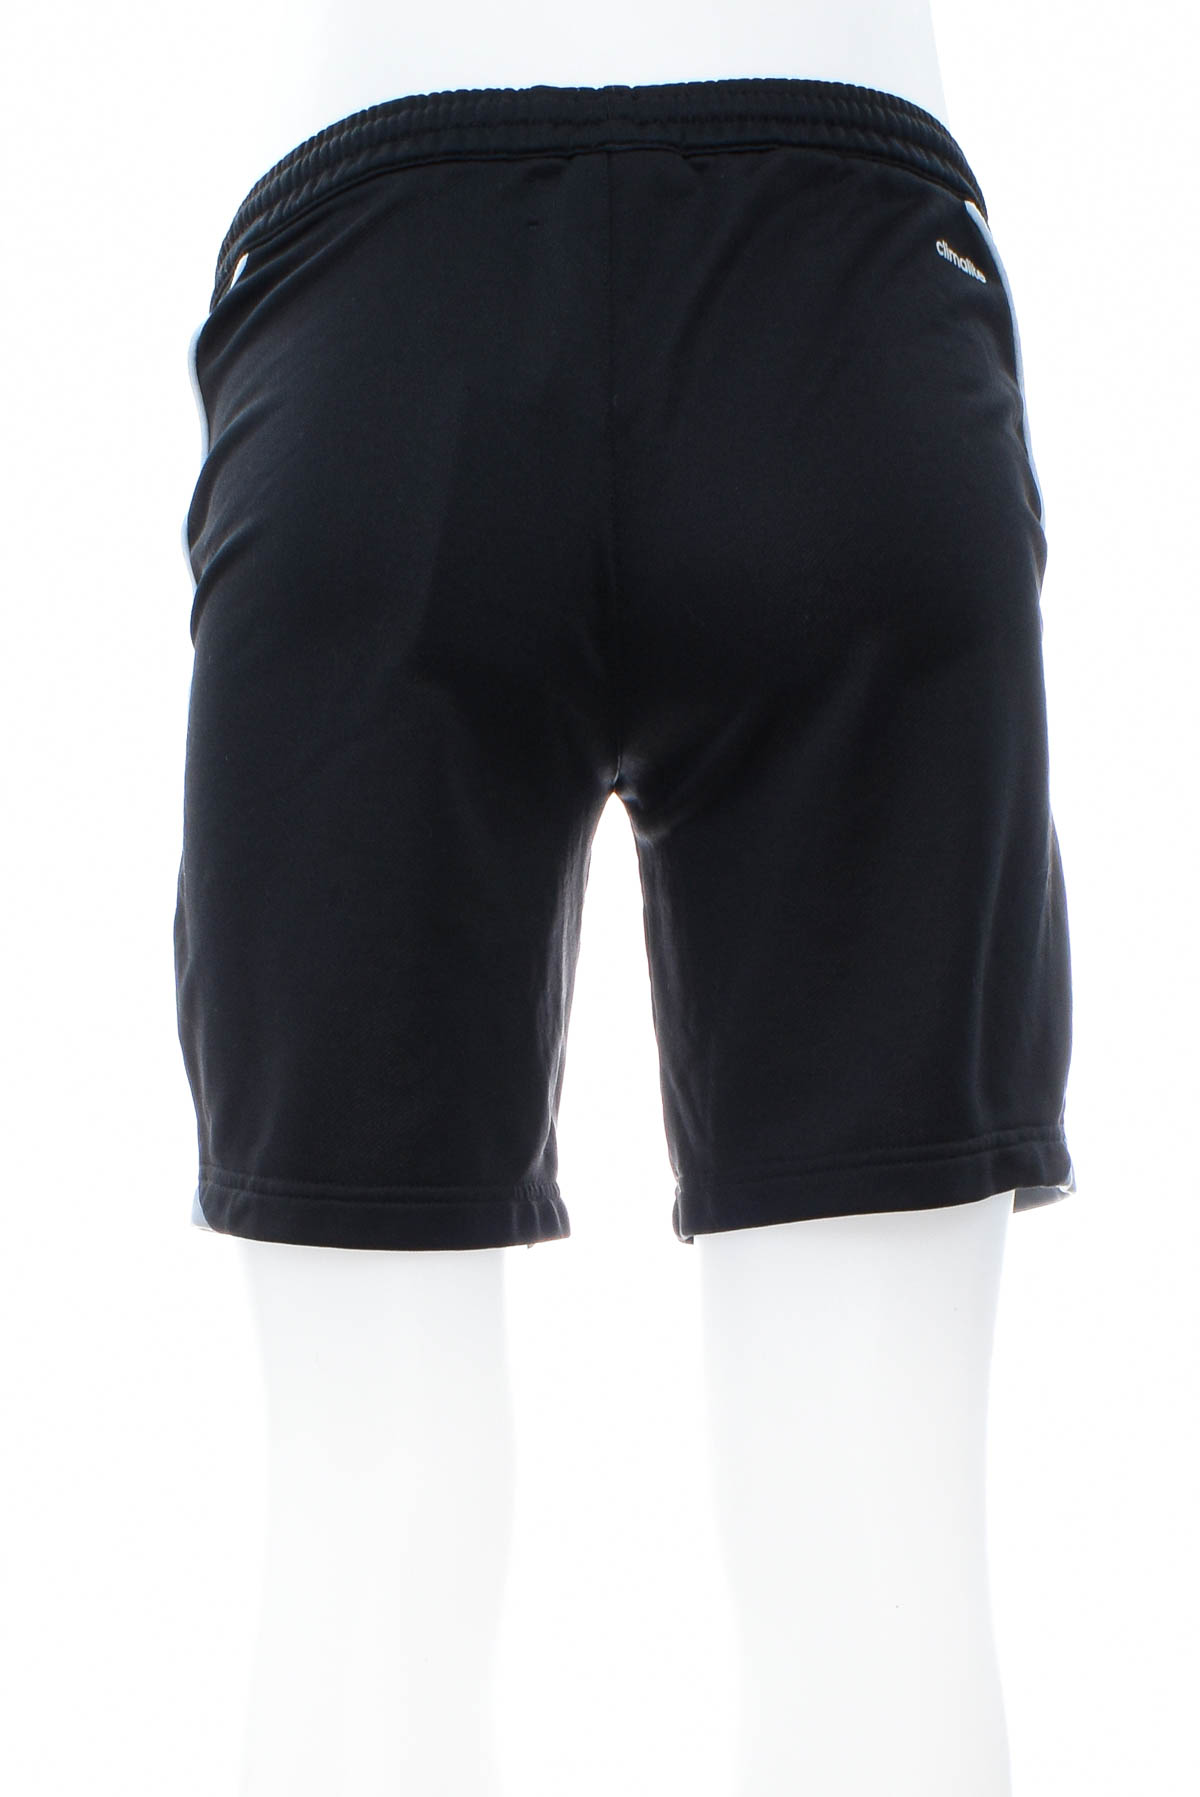 Shorts for boys - Adidas - 1